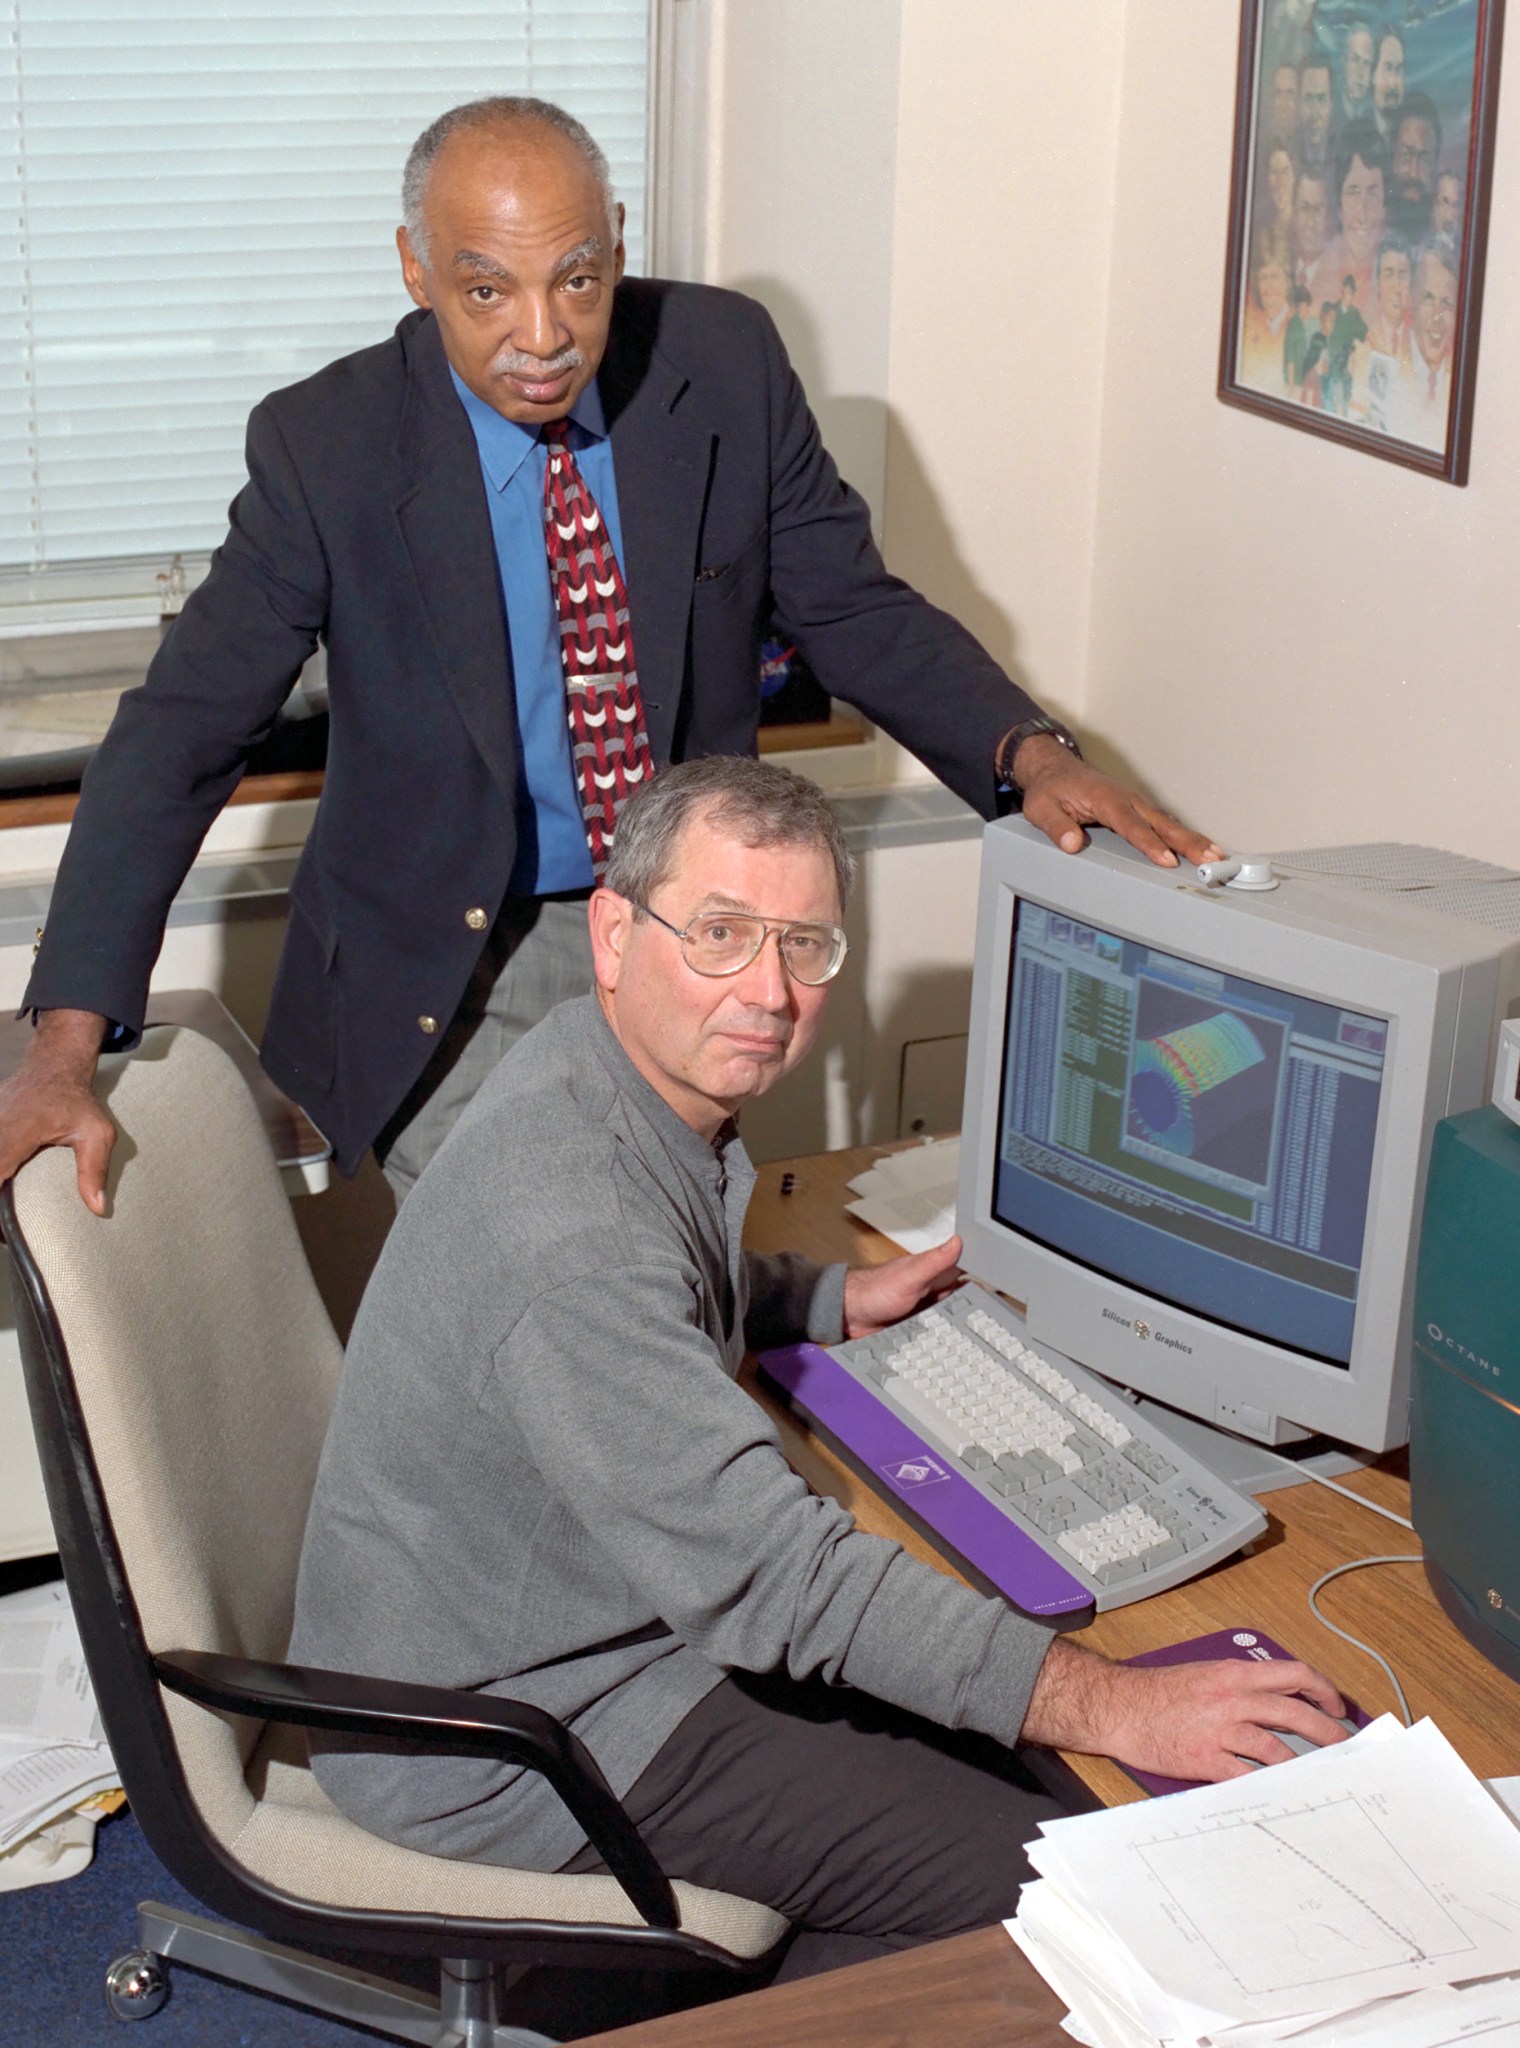 Man at computer screen and man standing.